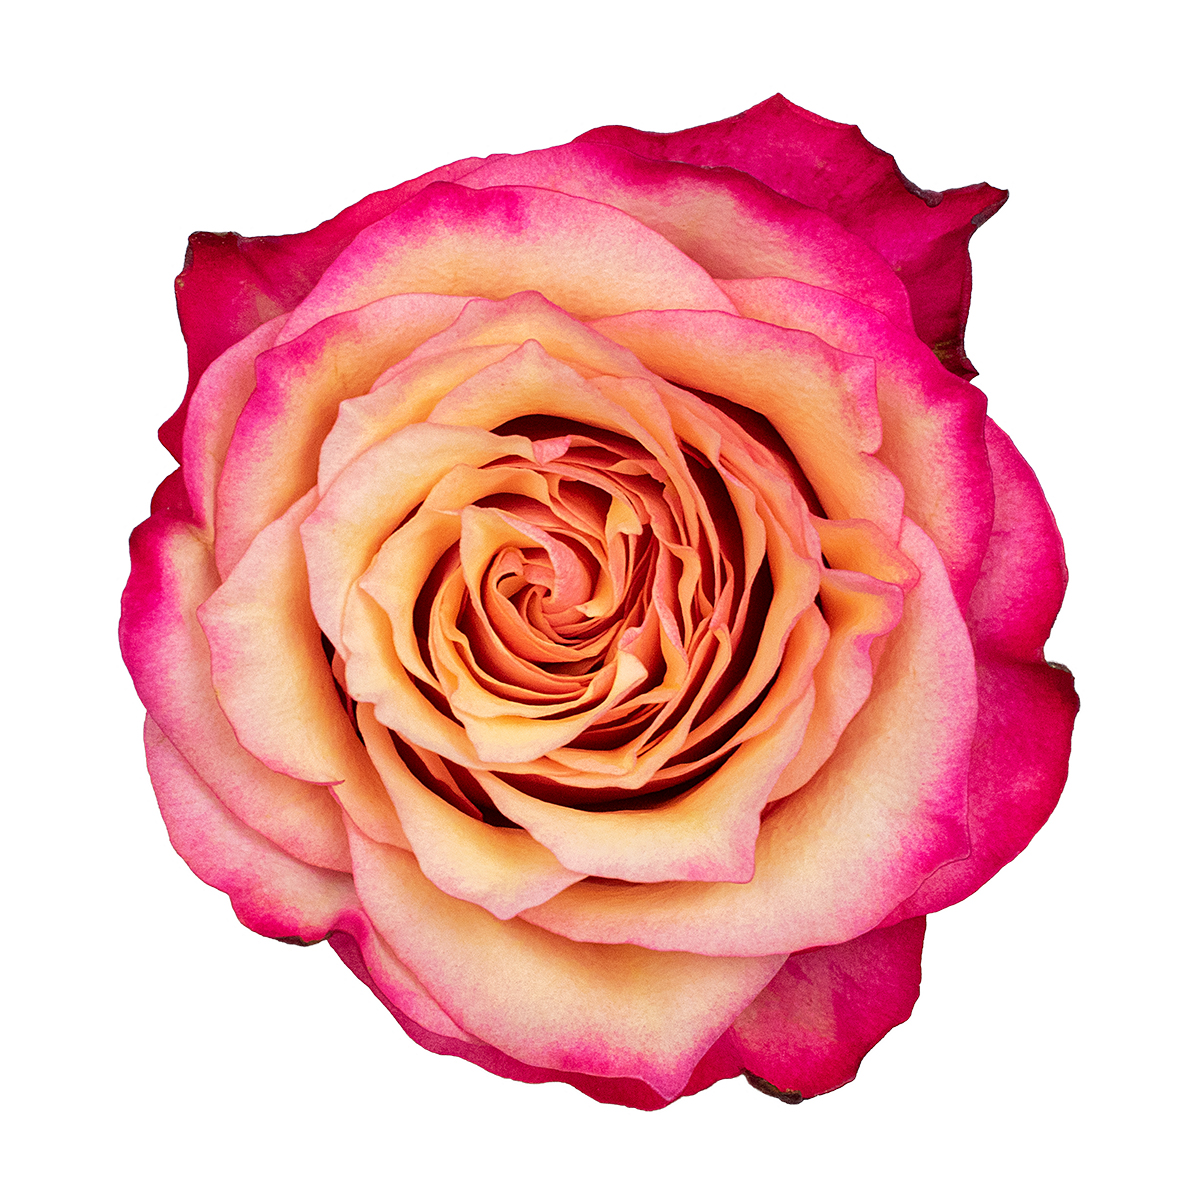 BOGART rose - Florist Rose Paradise! - Decofresh TOTF2020 on Thursd